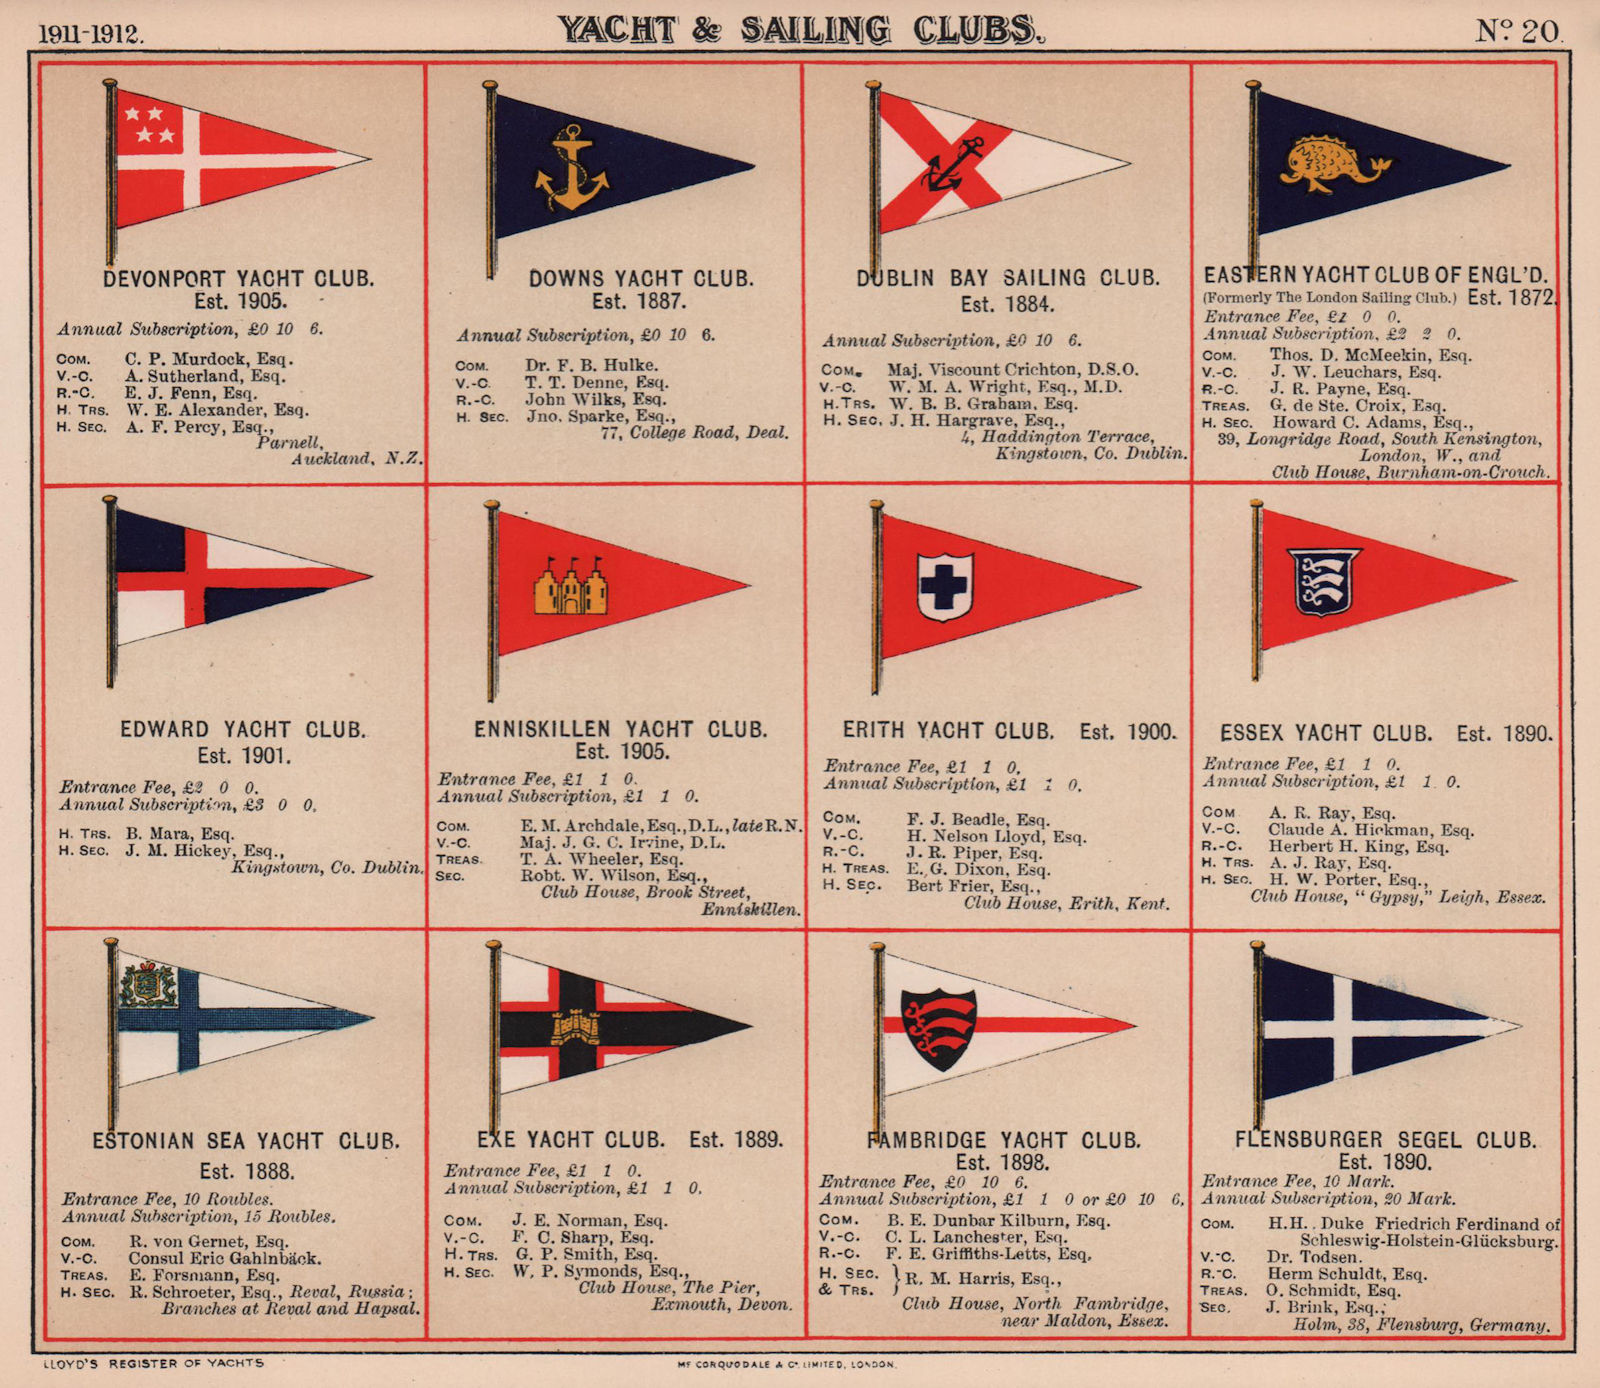 YACHT & SAILING CLUB FLAGS D-F Devonport Dublin Erith Essex Exe Flensburg 1911